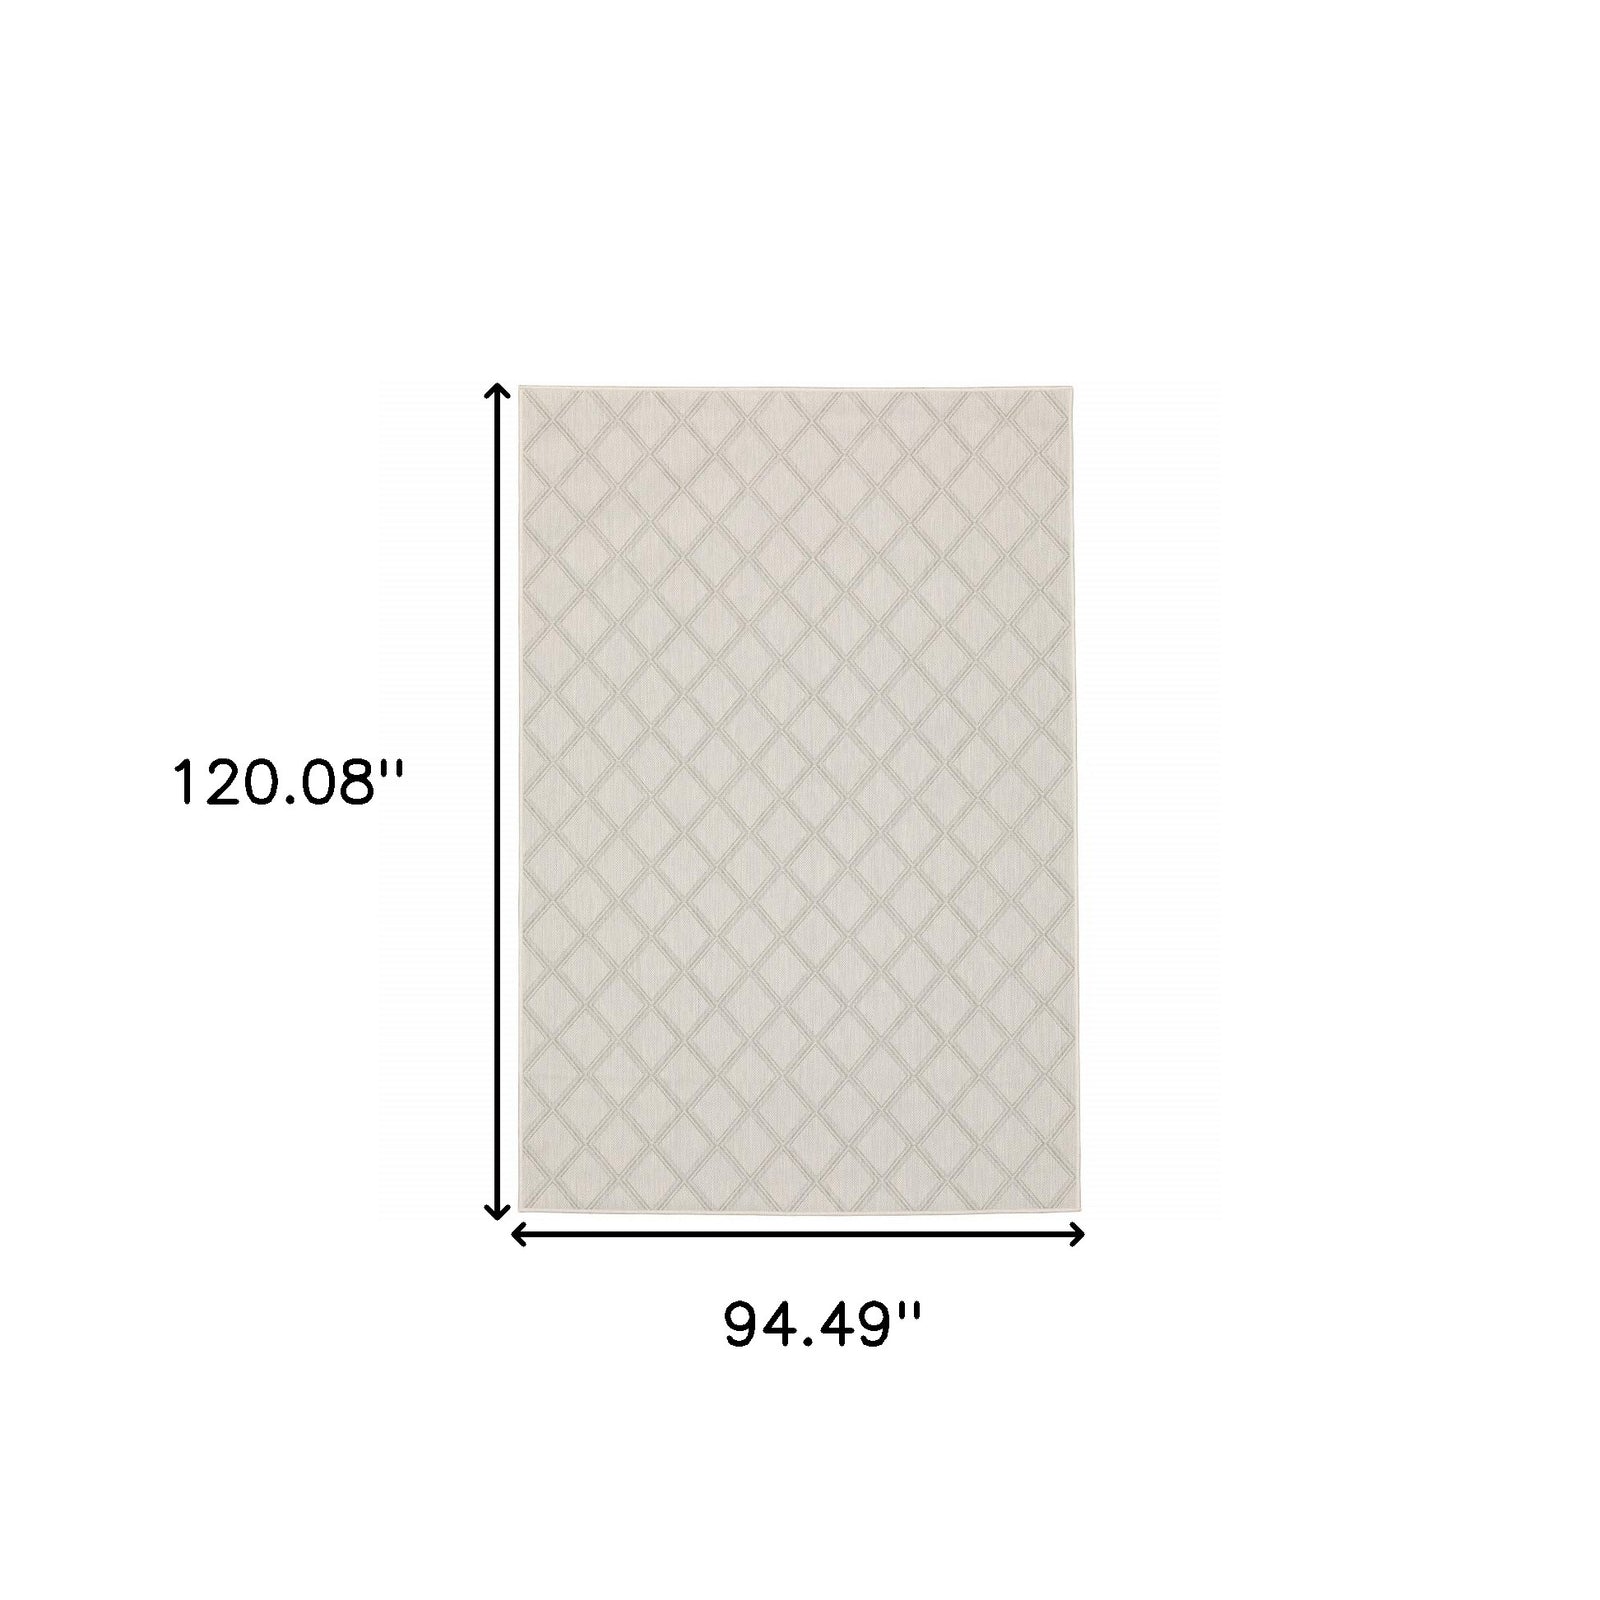 8' X 10' Ivory Geometric Stain Resistant Indoor Outdoor Area Rug